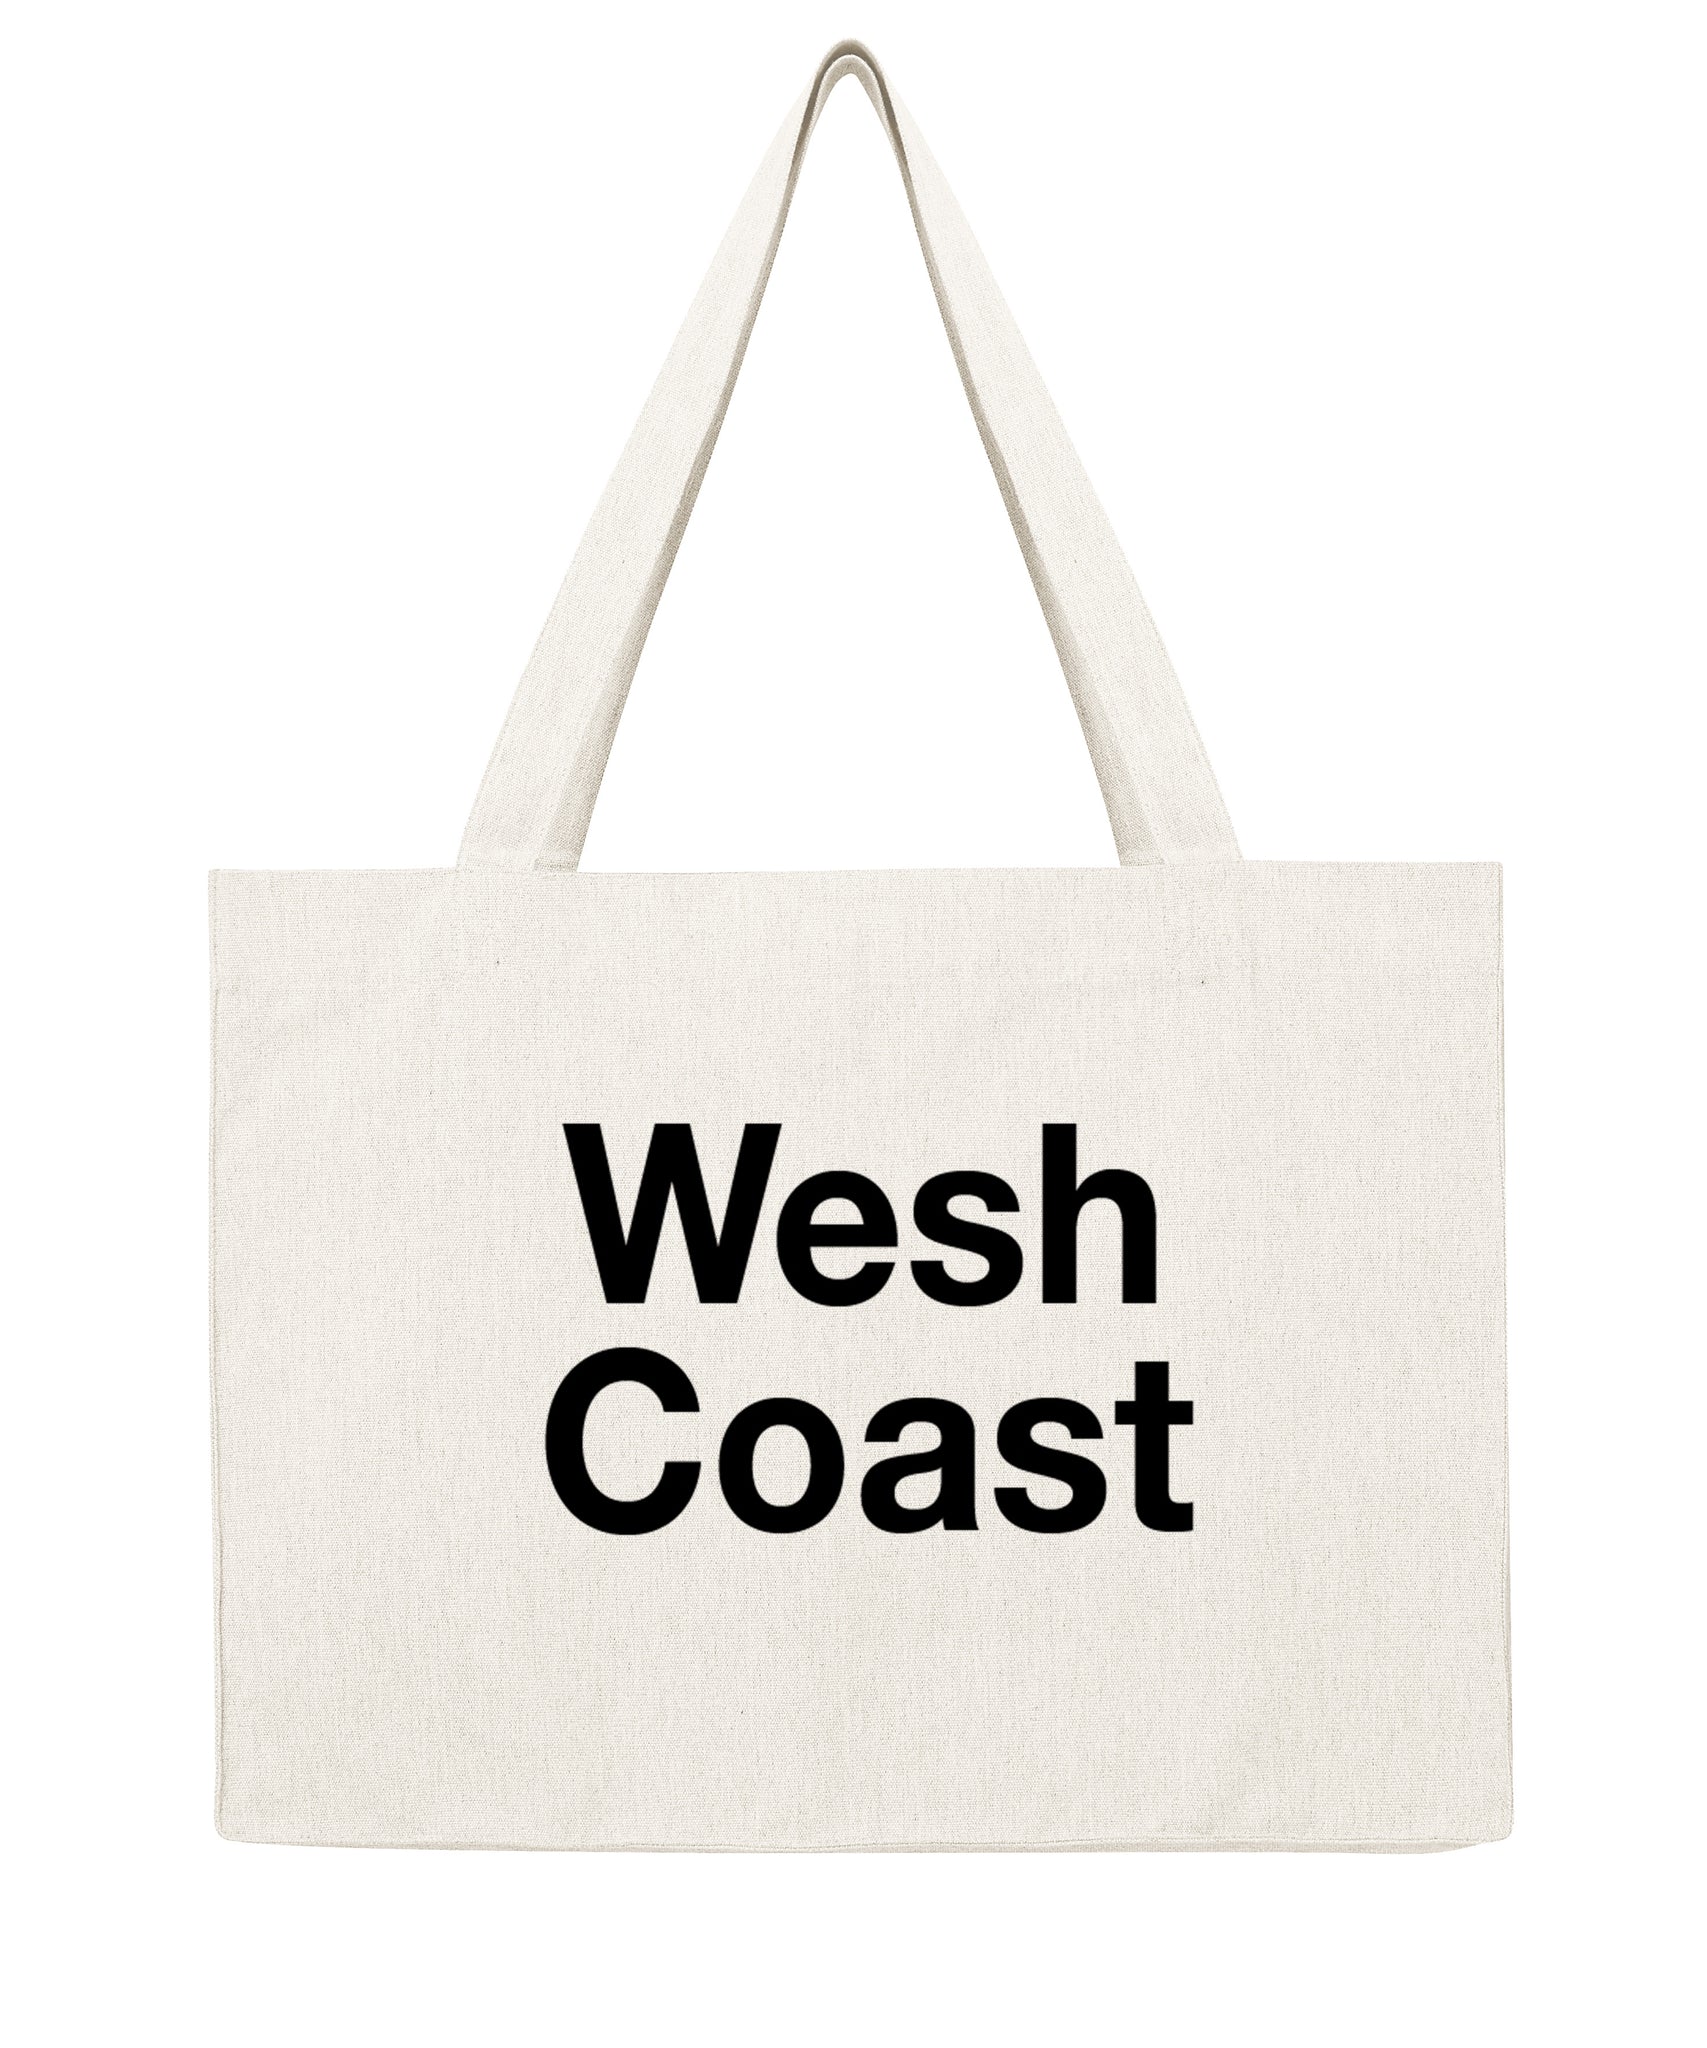 Wesh Coast - Shopping bag-Sacs-Atelier Amelot